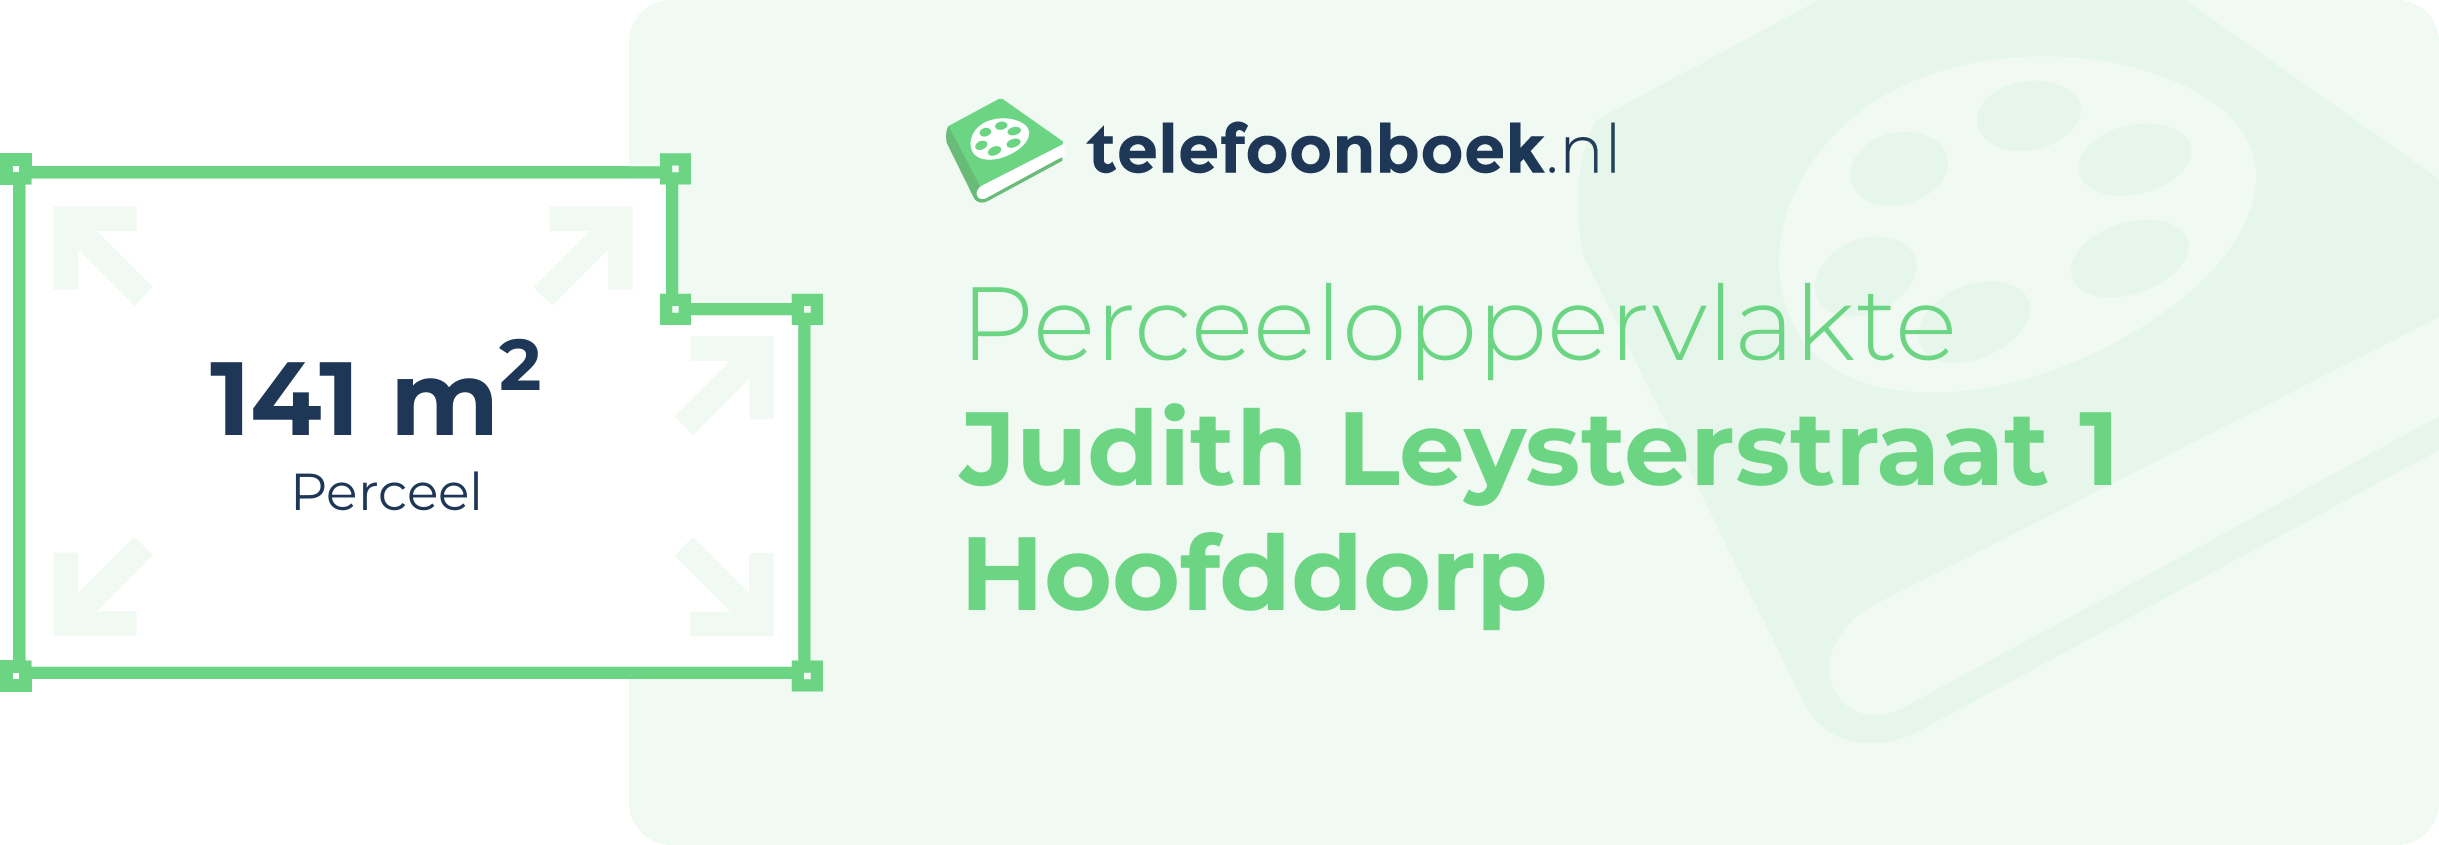 Perceeloppervlakte Judith Leysterstraat 1 Hoofddorp